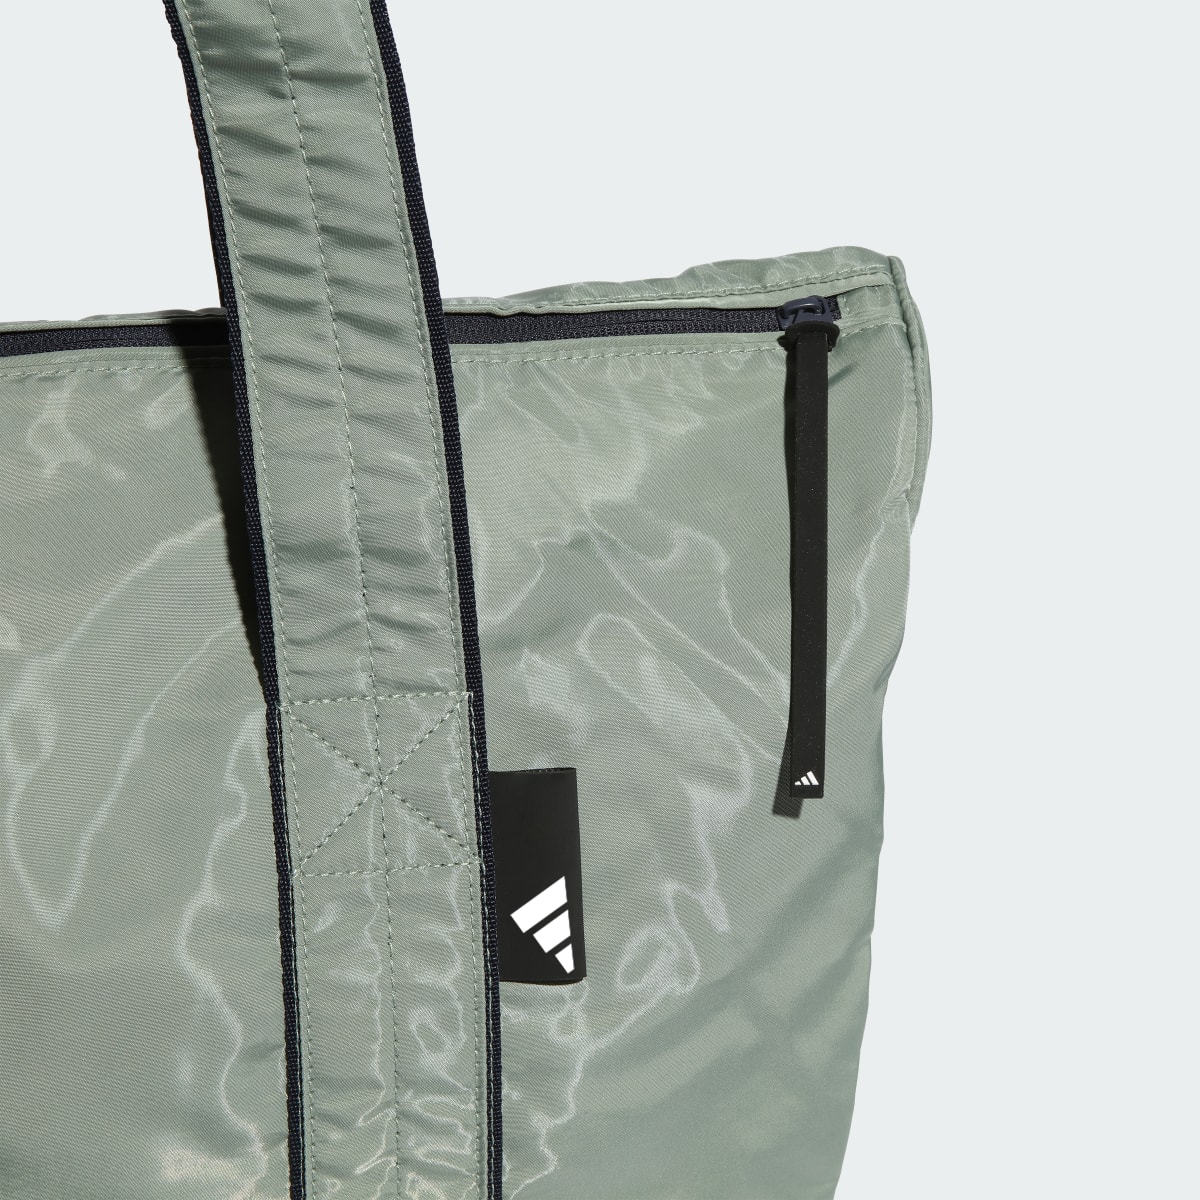 Adidas Studio Tote Shoulder Bag. 6